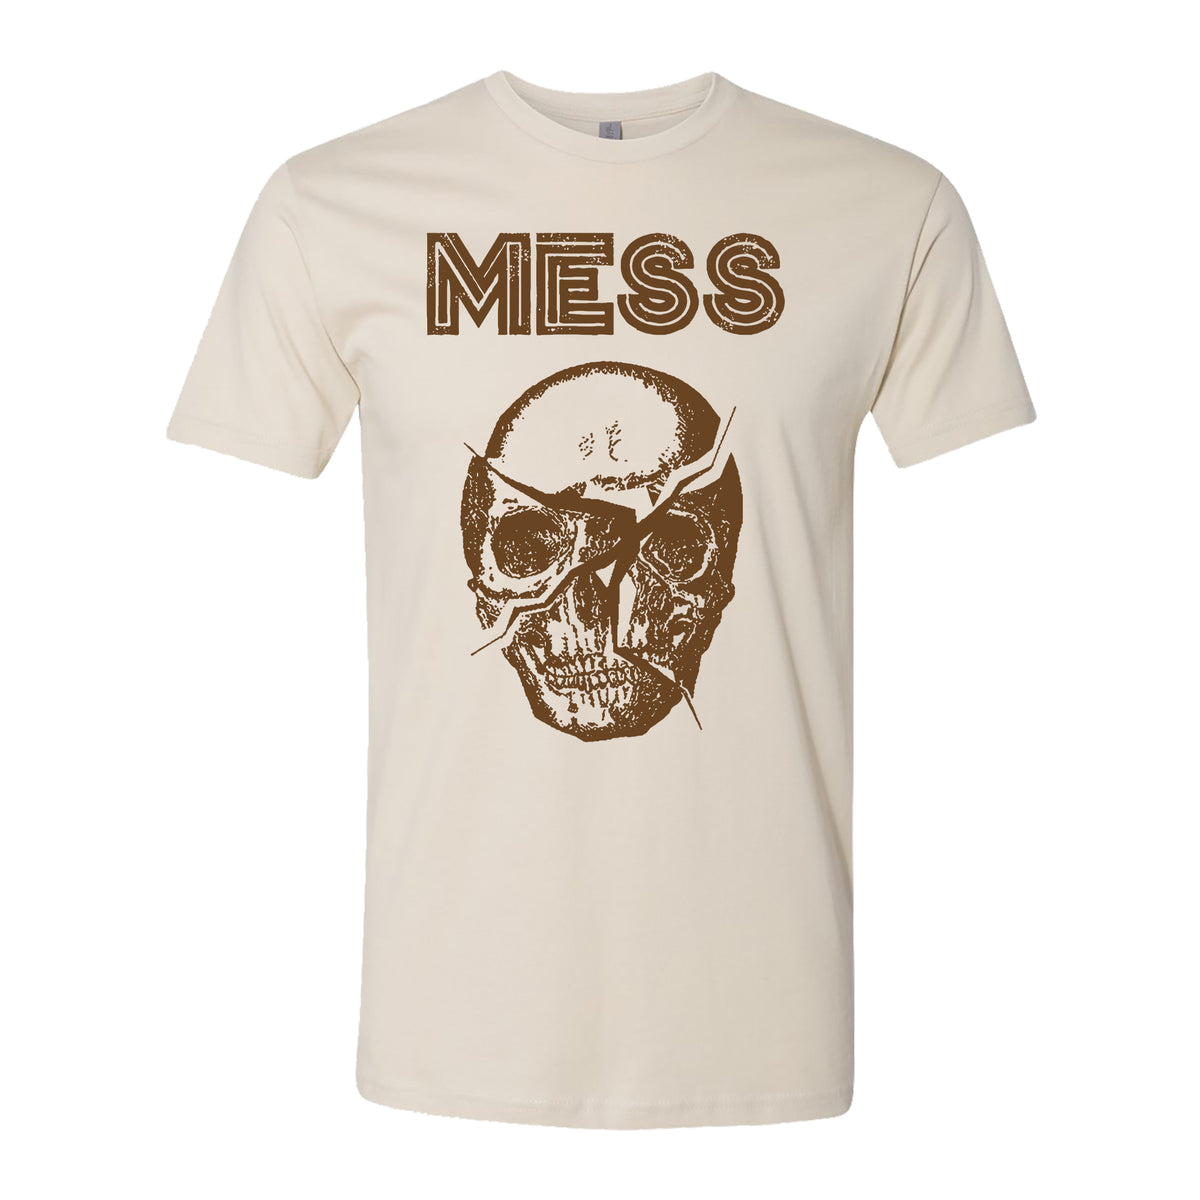 Mess - Skull - Brown On Natural - T-Shirt